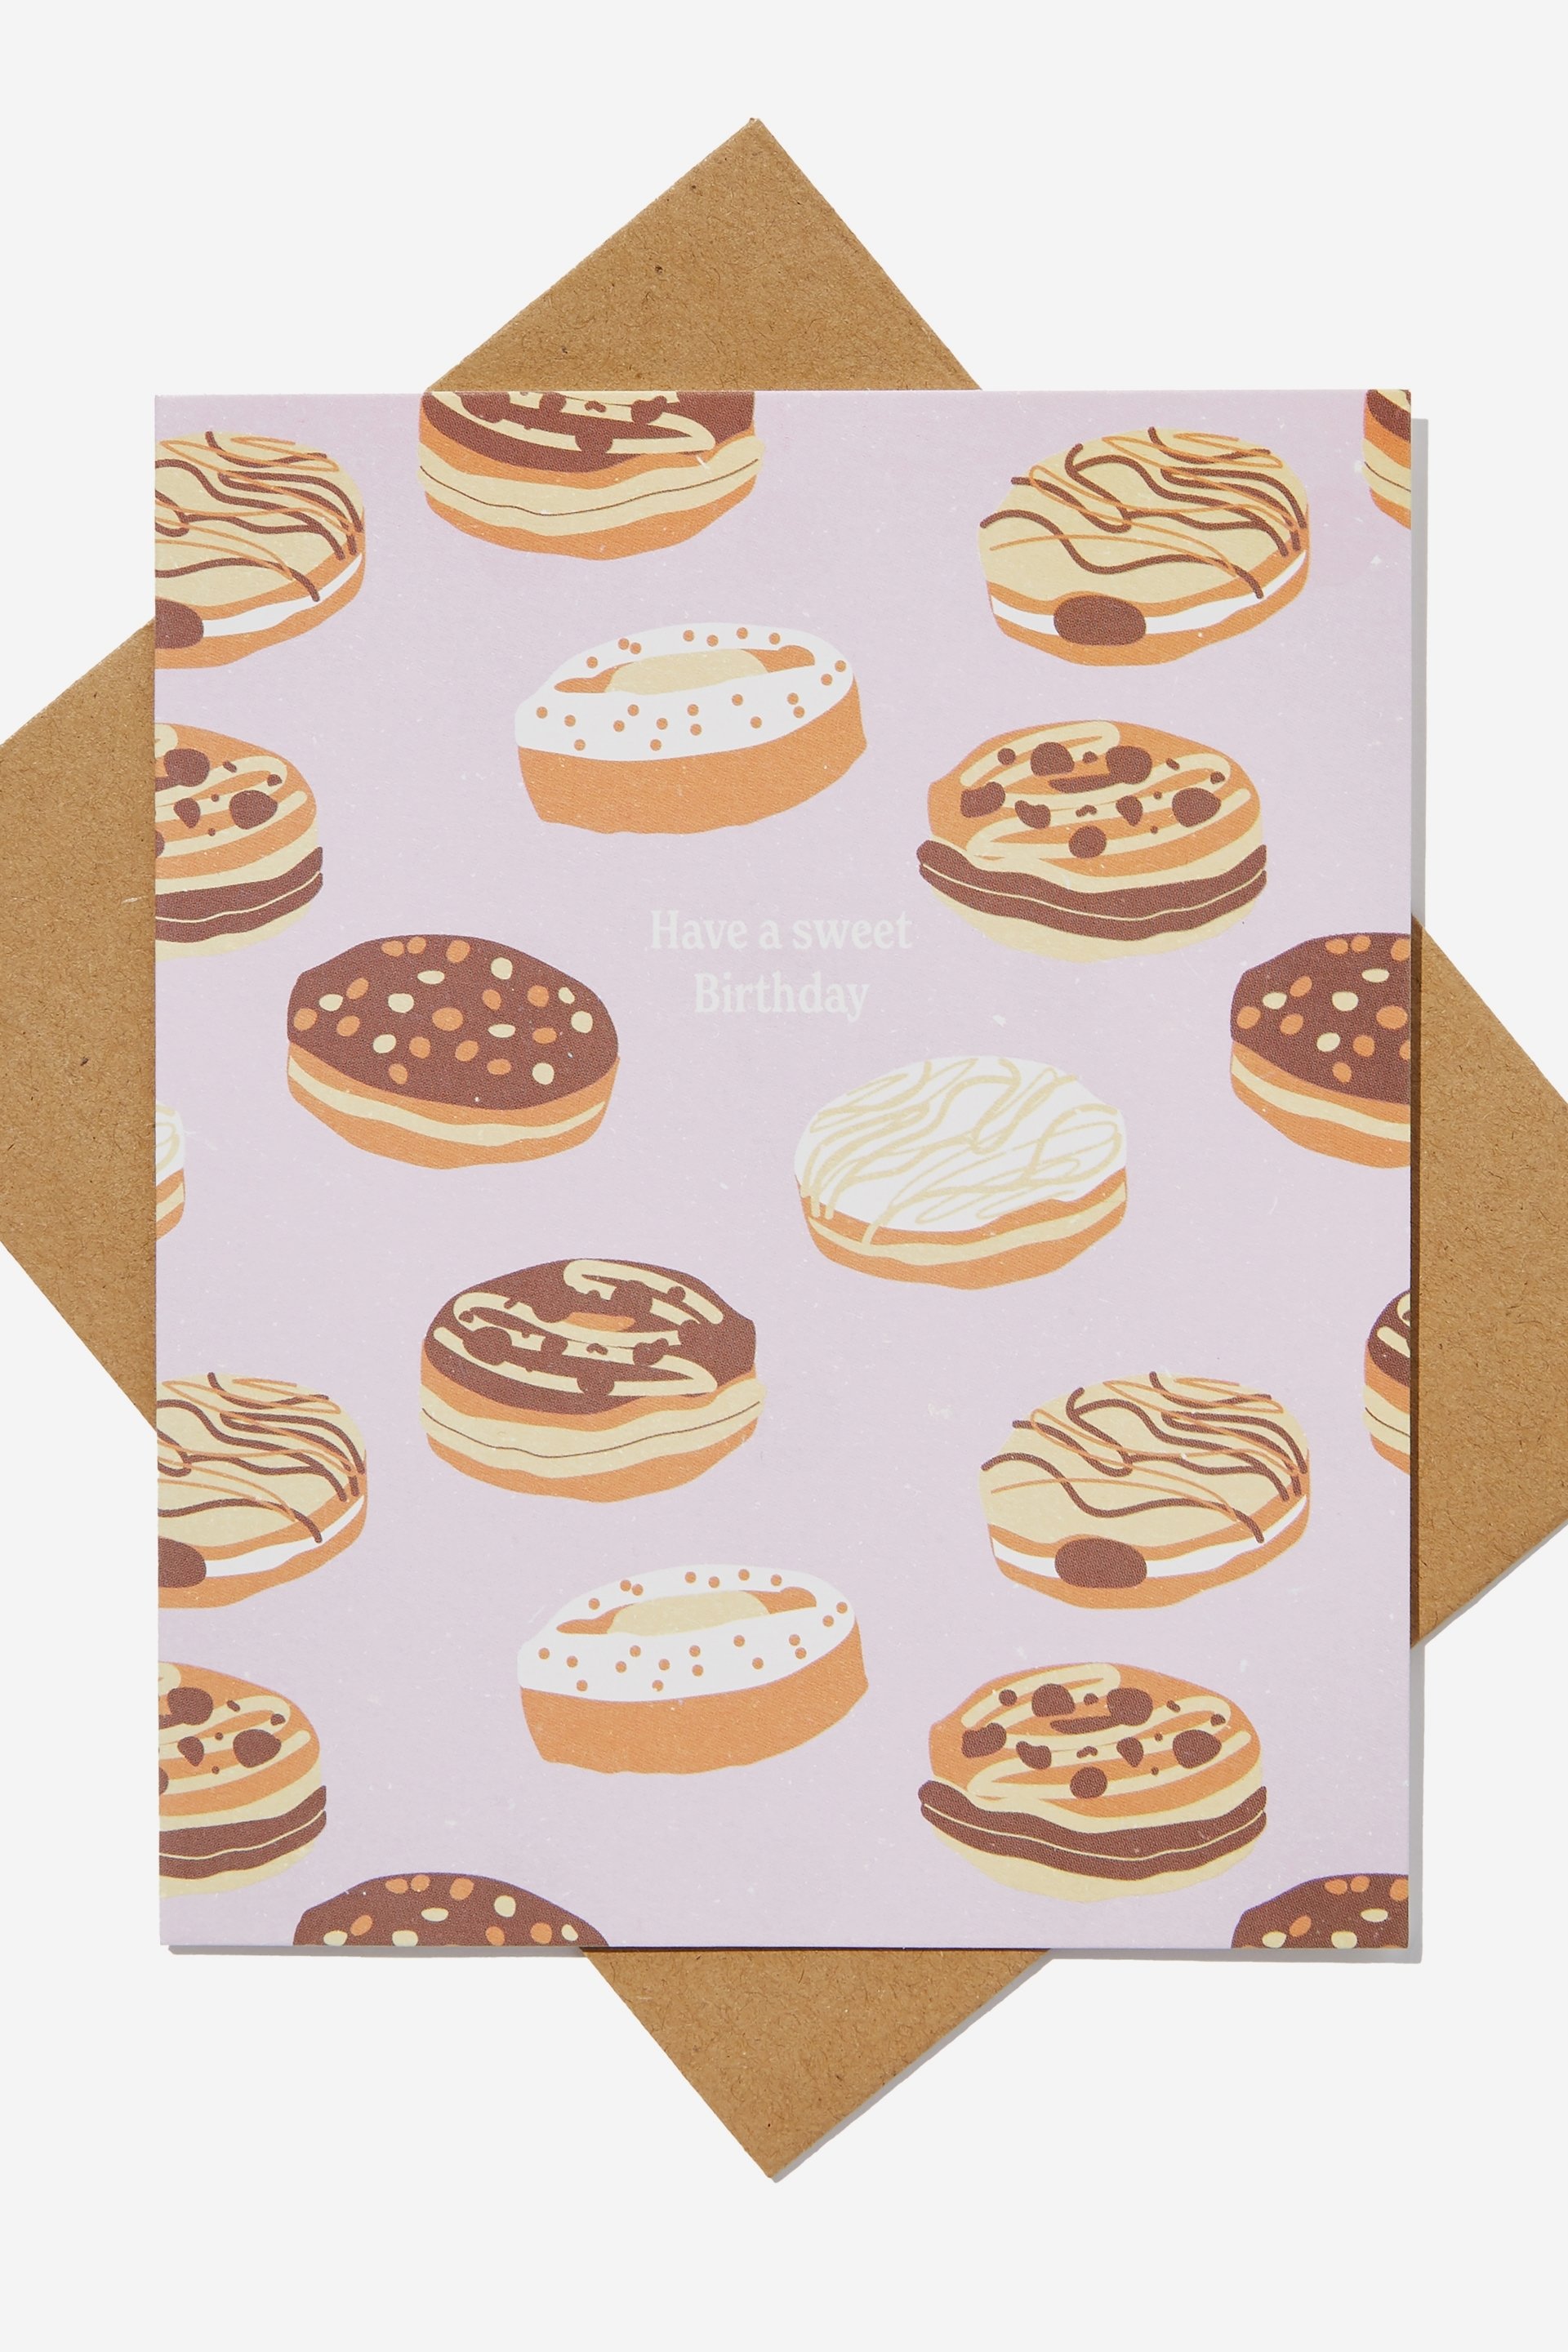 Typo - Premium Nice Birthday Card - Scented sweet donut birthday